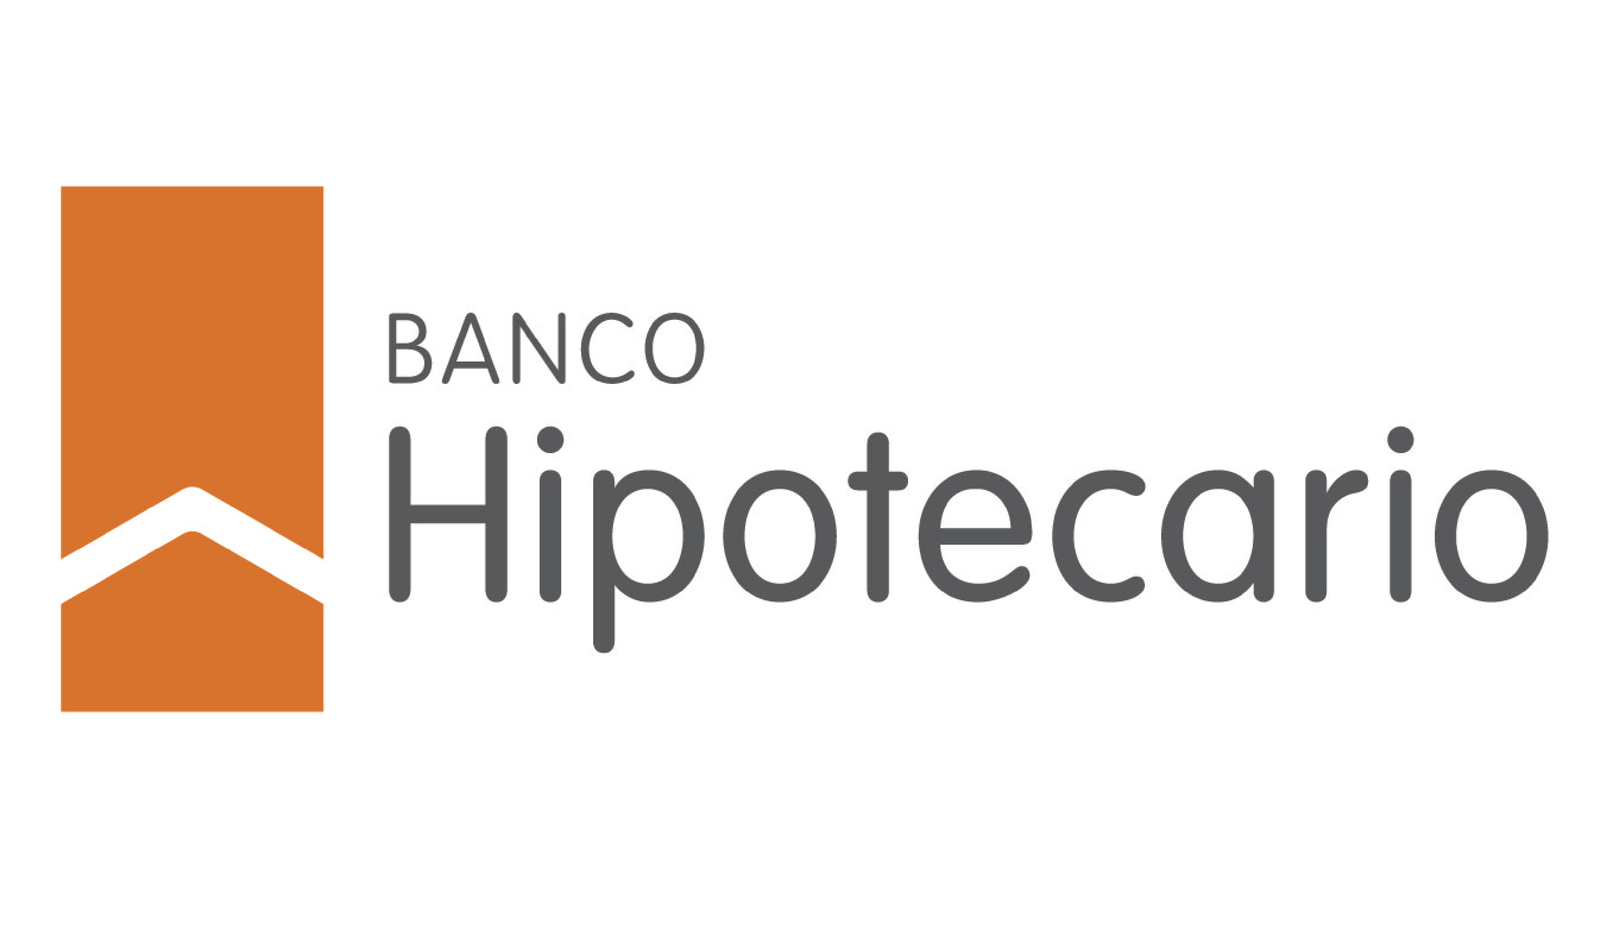 Banco1_Hipotecario